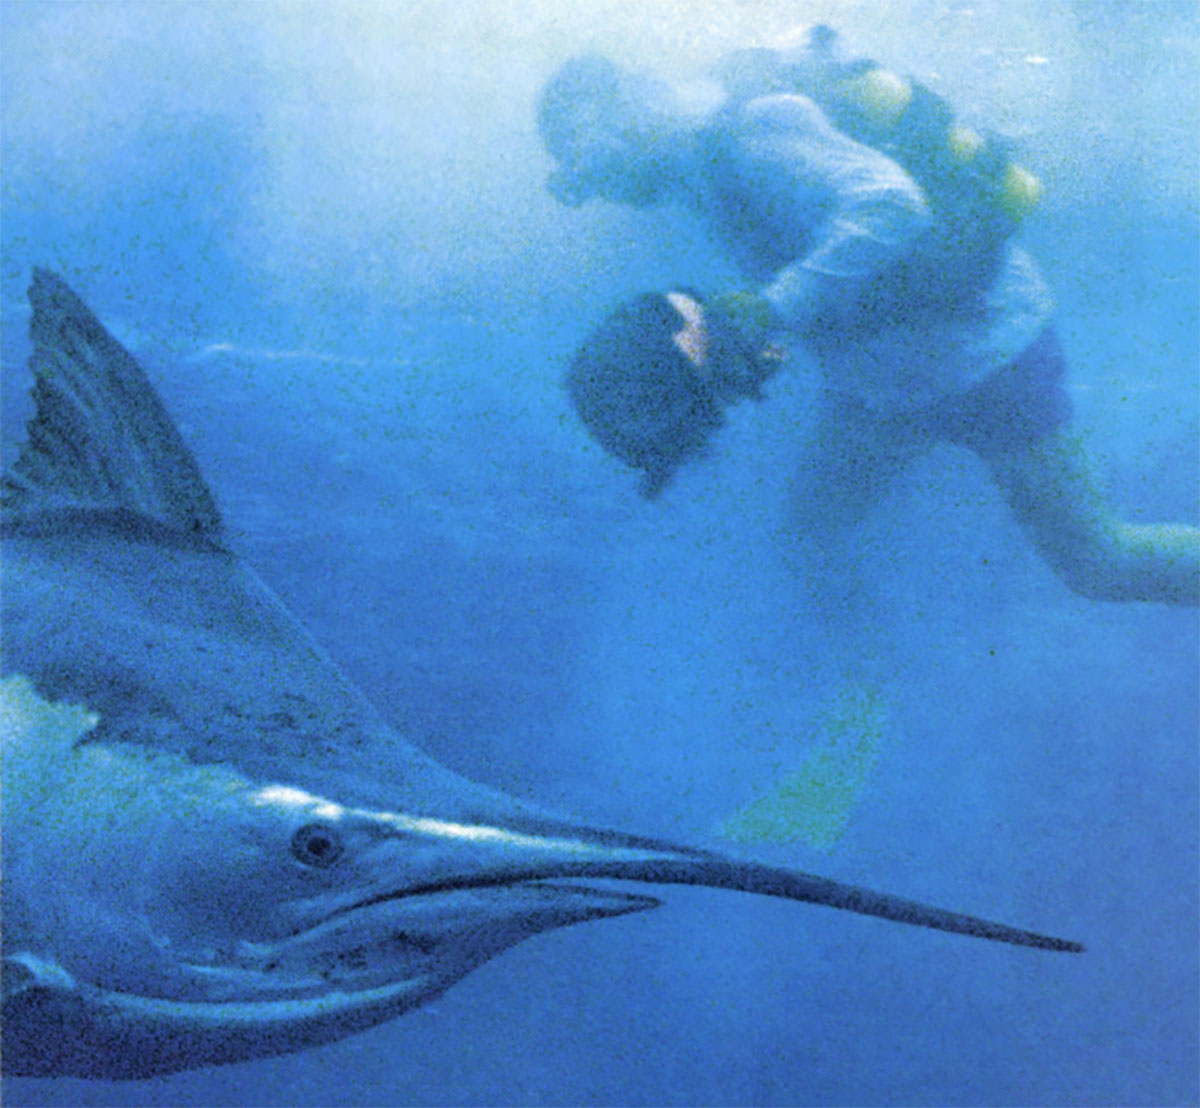 Billfishing: The Quest for Marlin, Swordfish, Spearfish & Sailfish